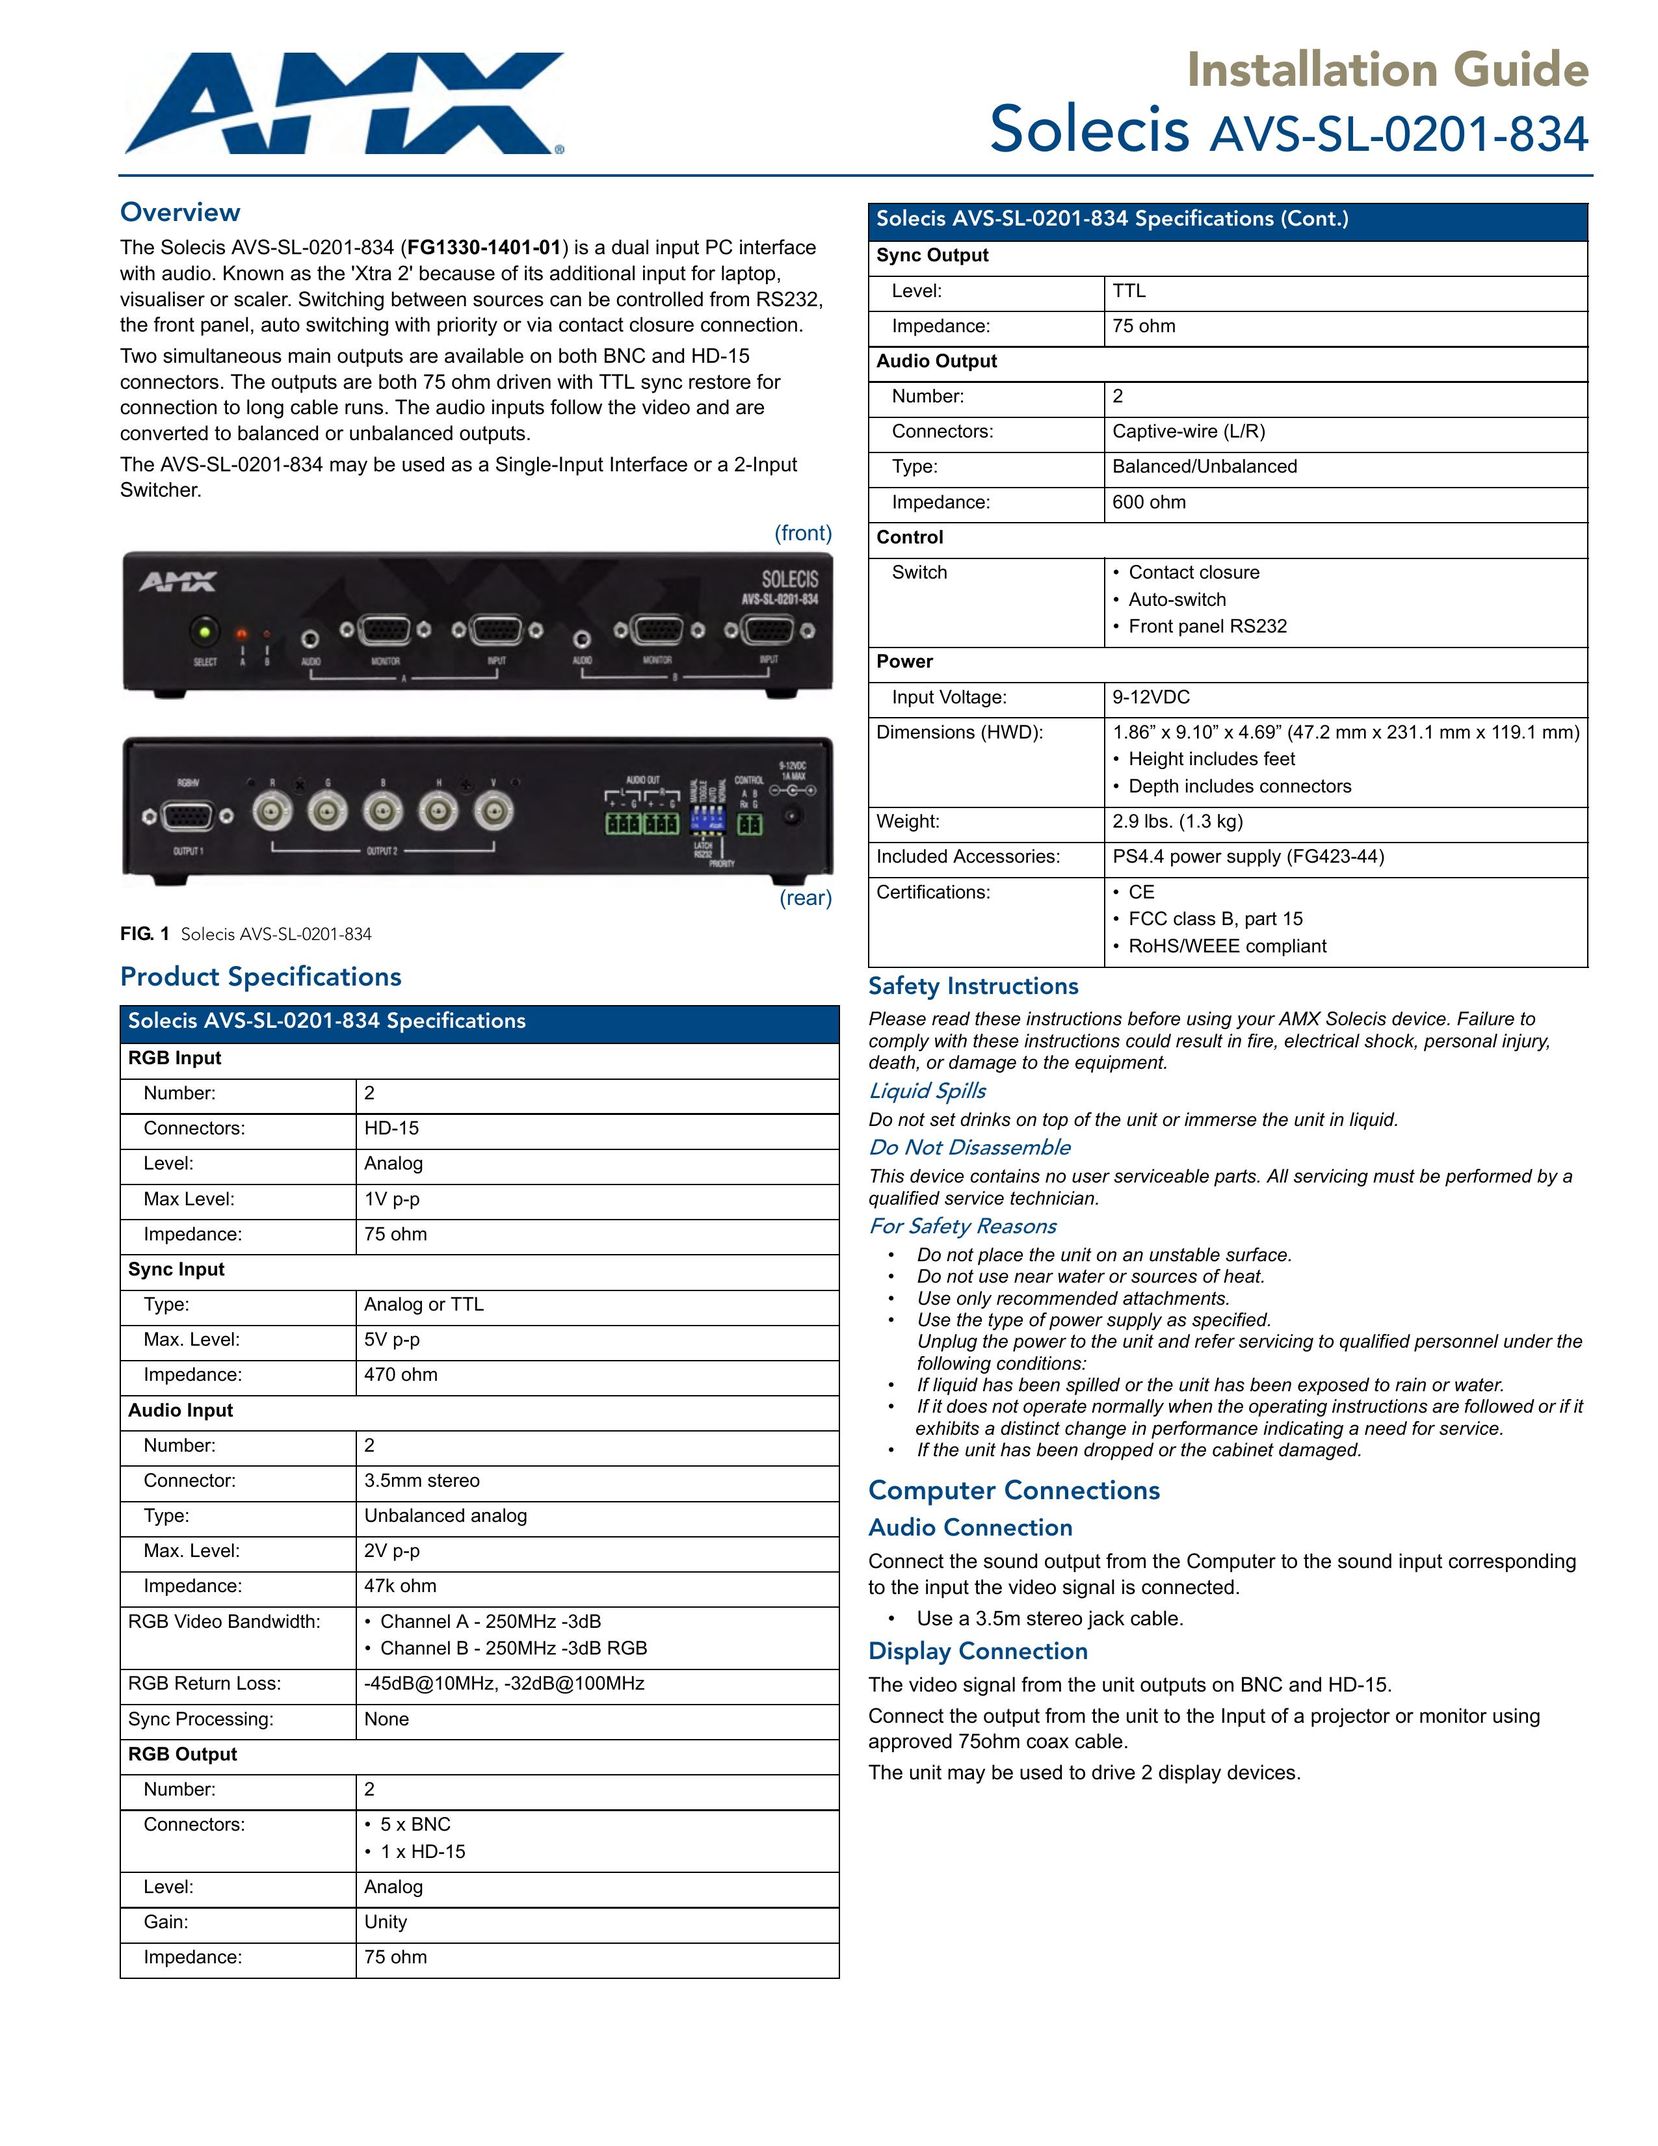 AMX AVS-SL-0201-834 Network Card User Manual